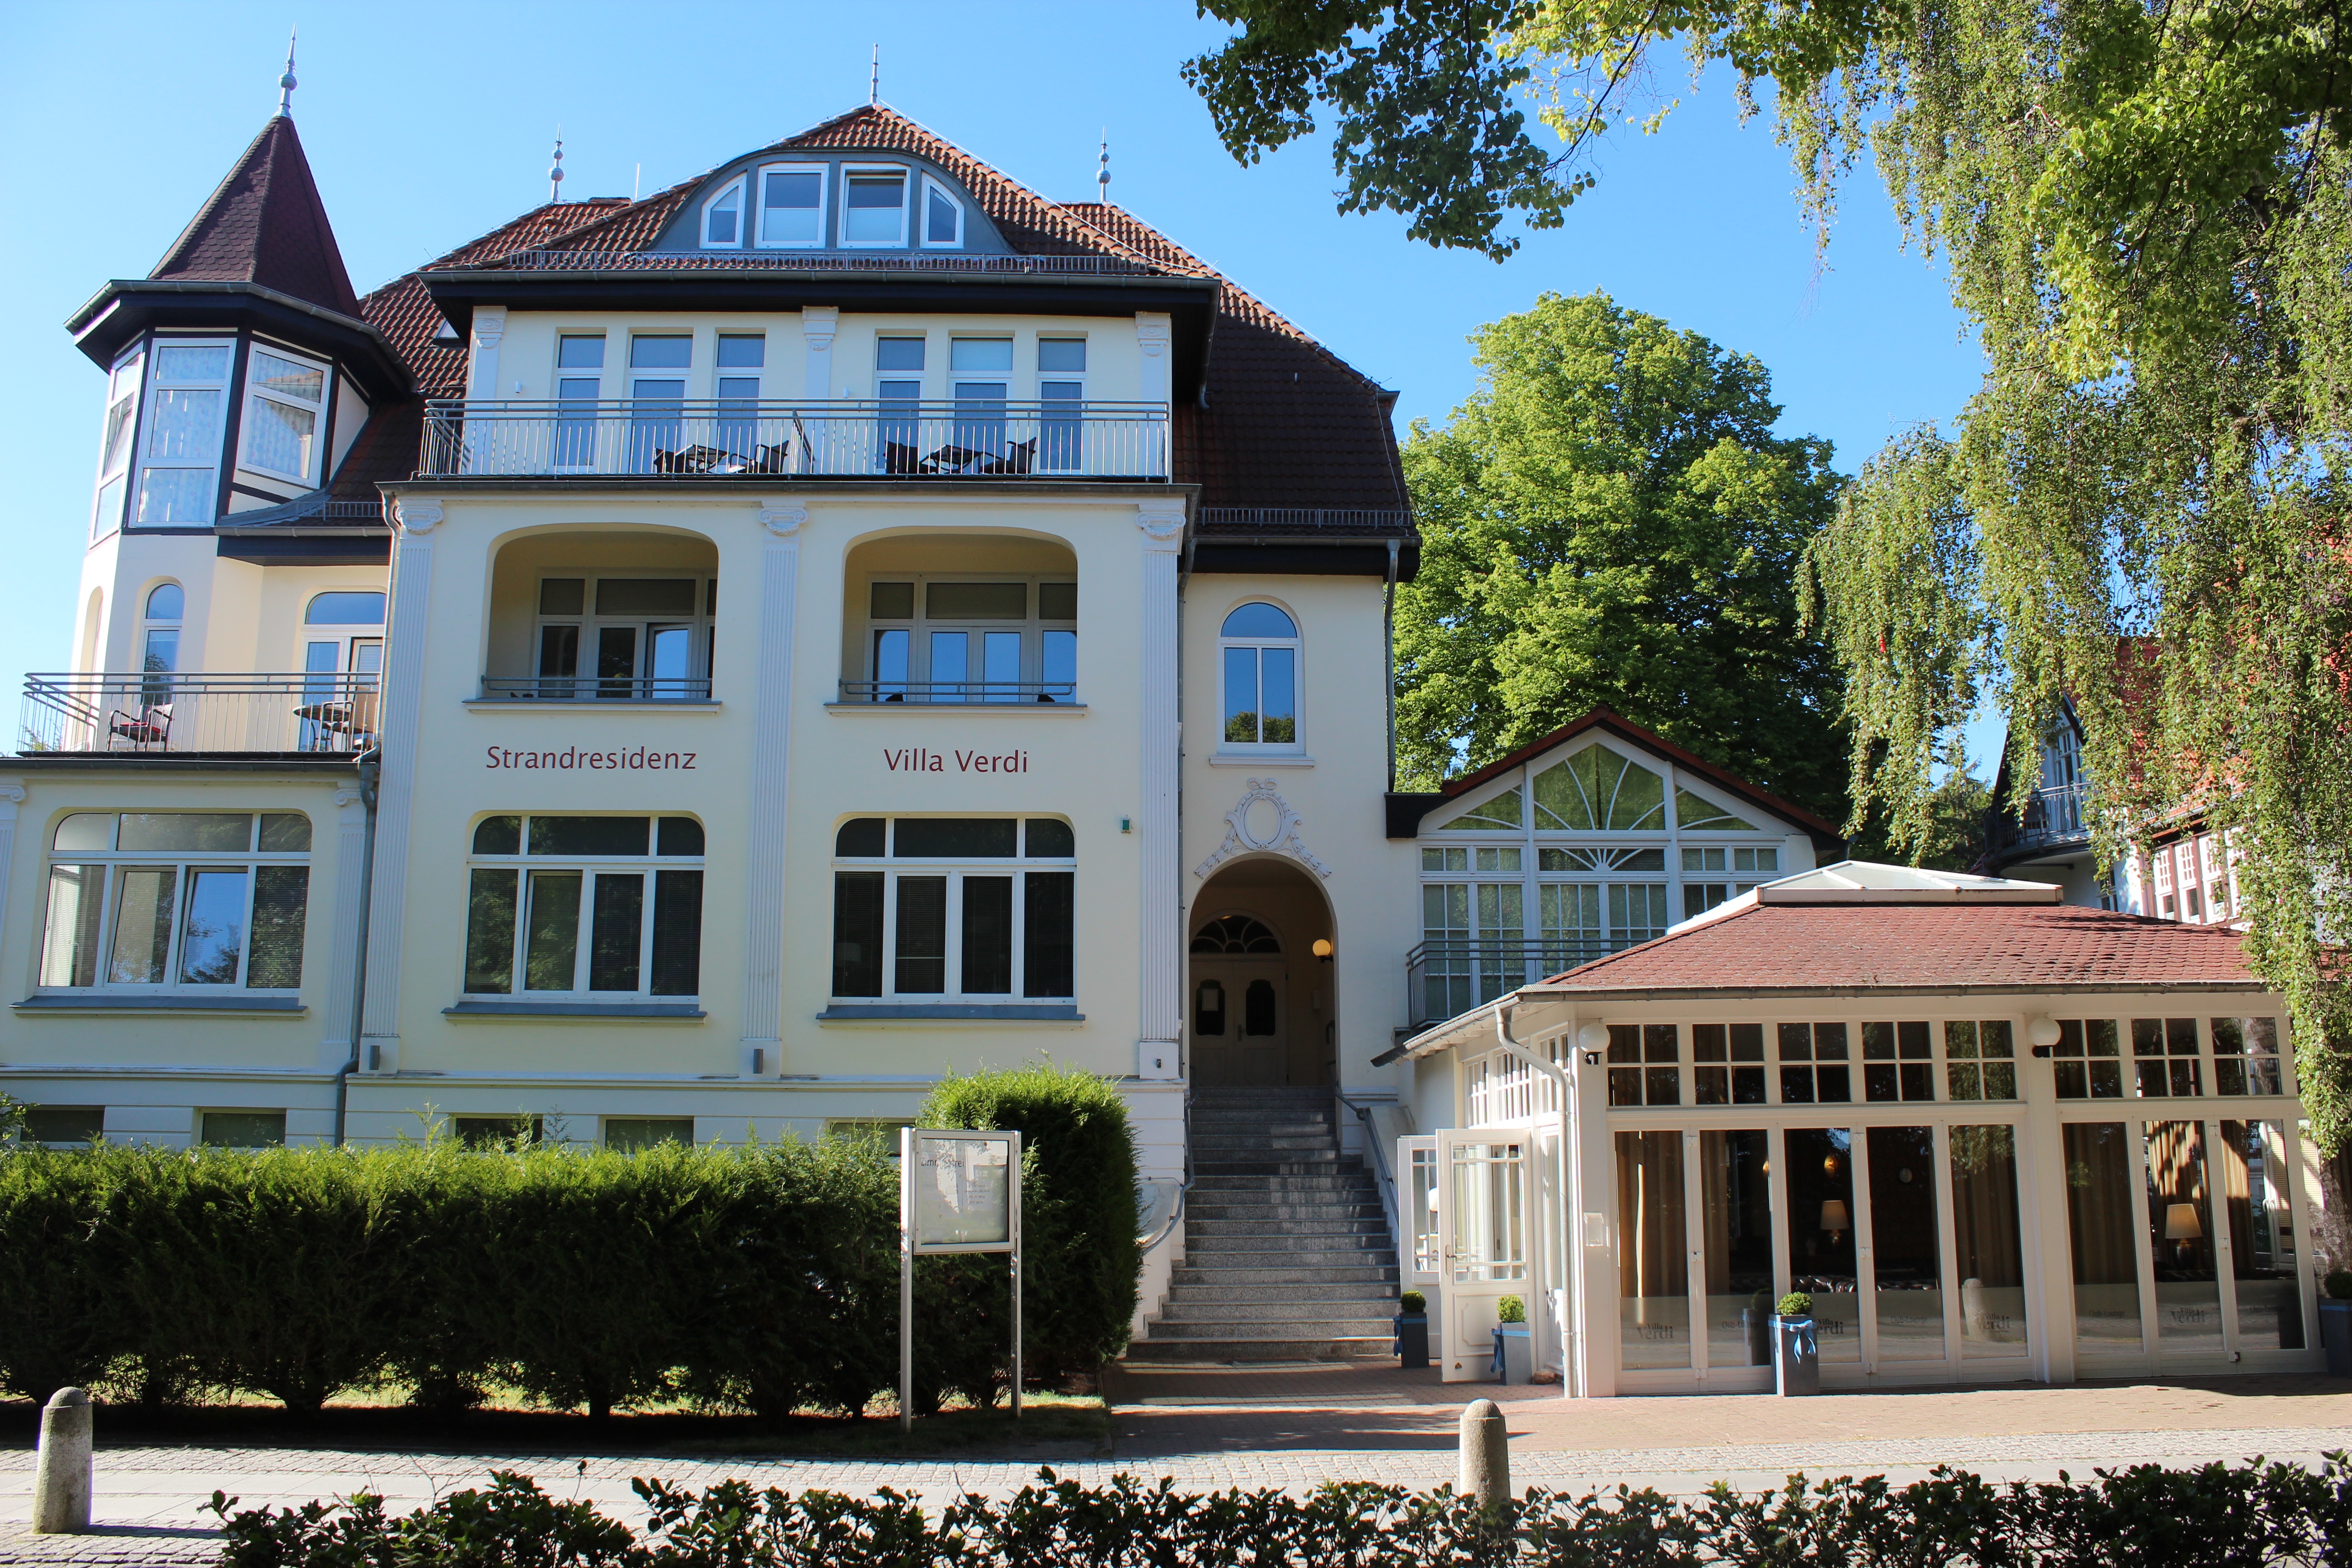 AKZENT Strandresidenz Villa Verdi, Kühlungsborn.
